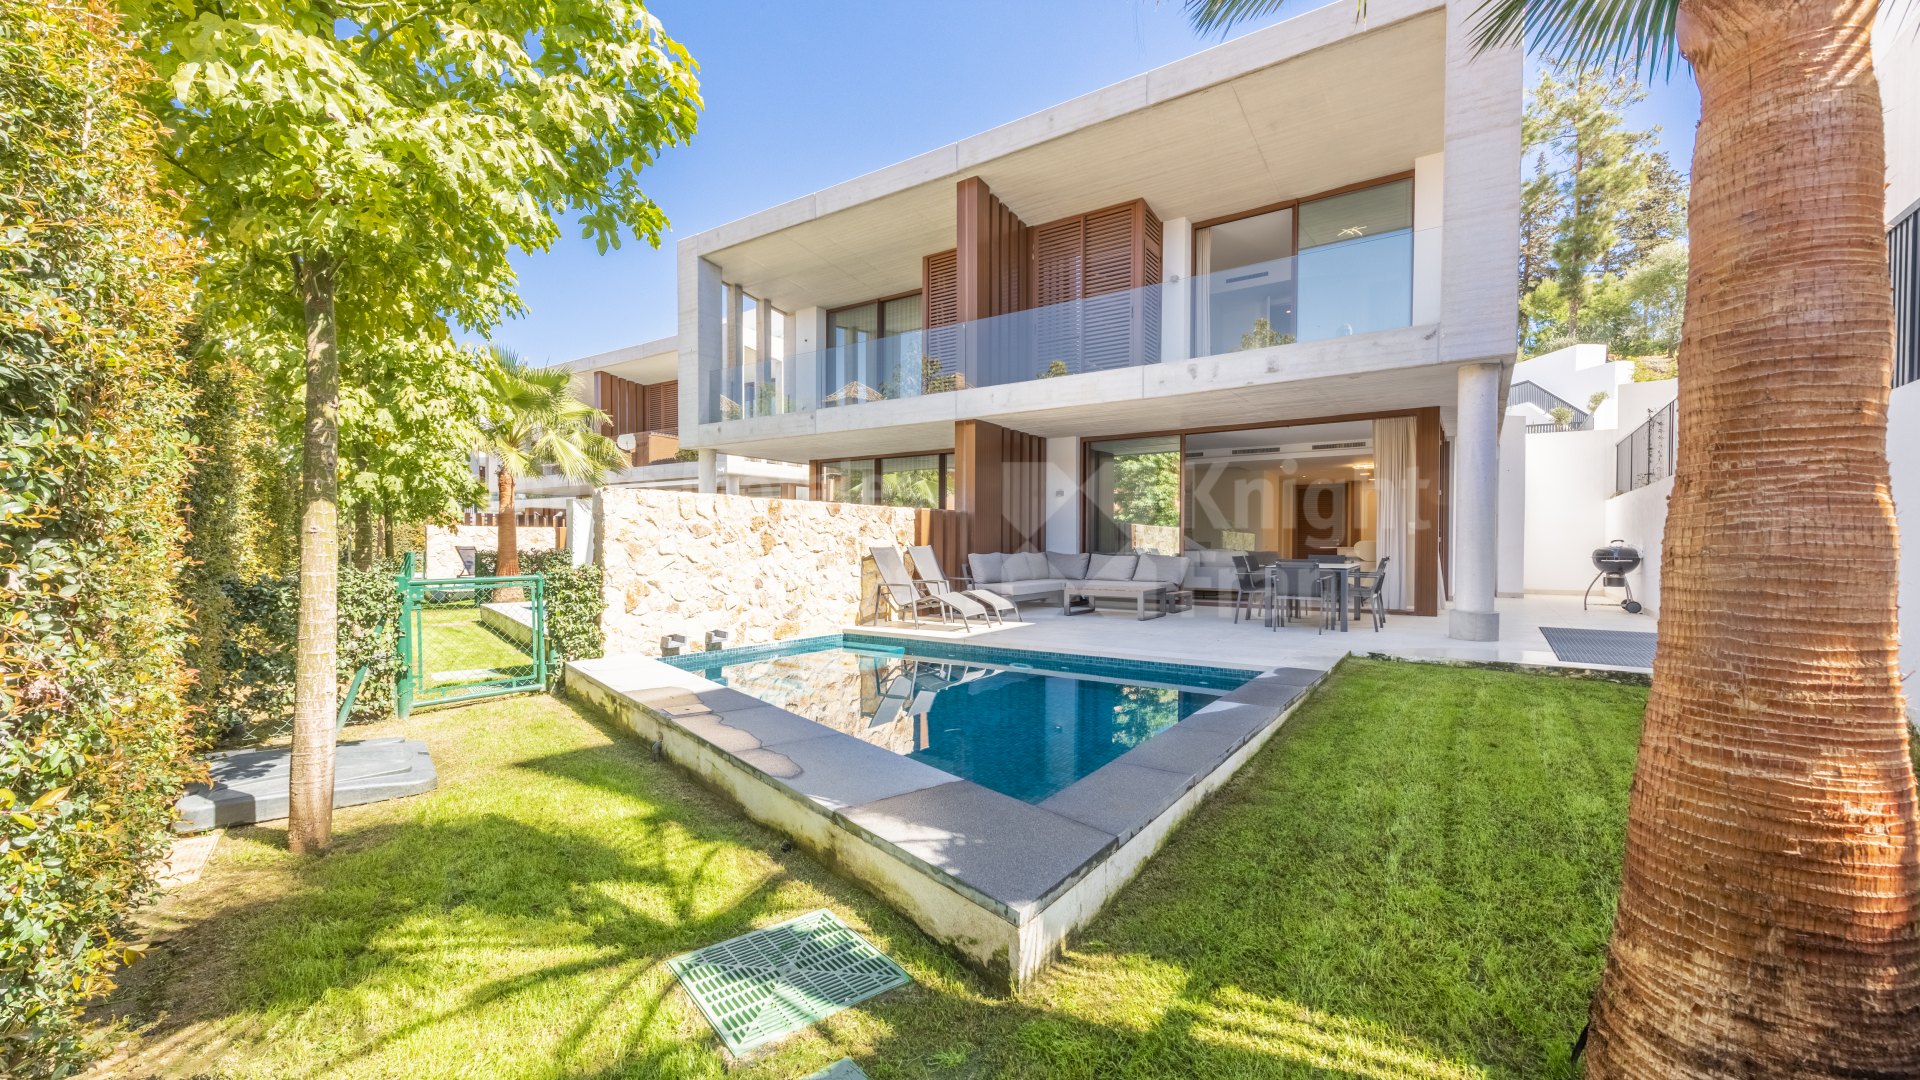 Marbella Golden Mile, Semi detached villa with private pool in The Golden Mile of Marbella